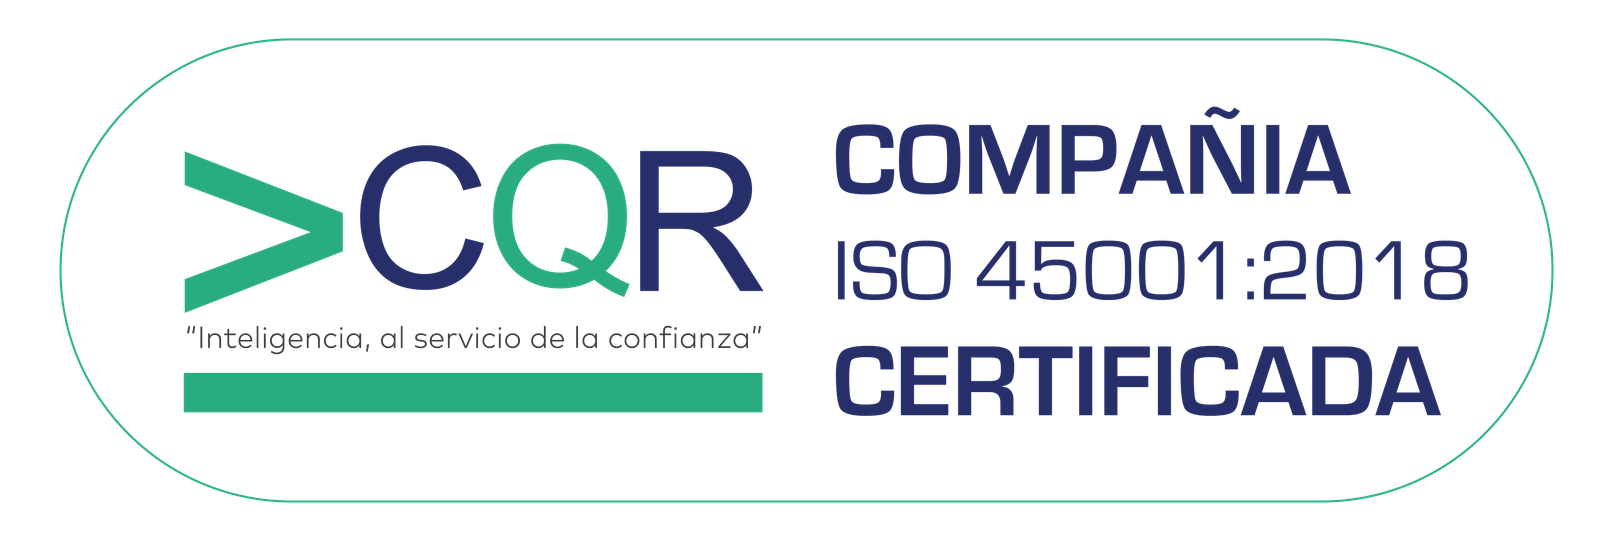 Logo 45001-2018